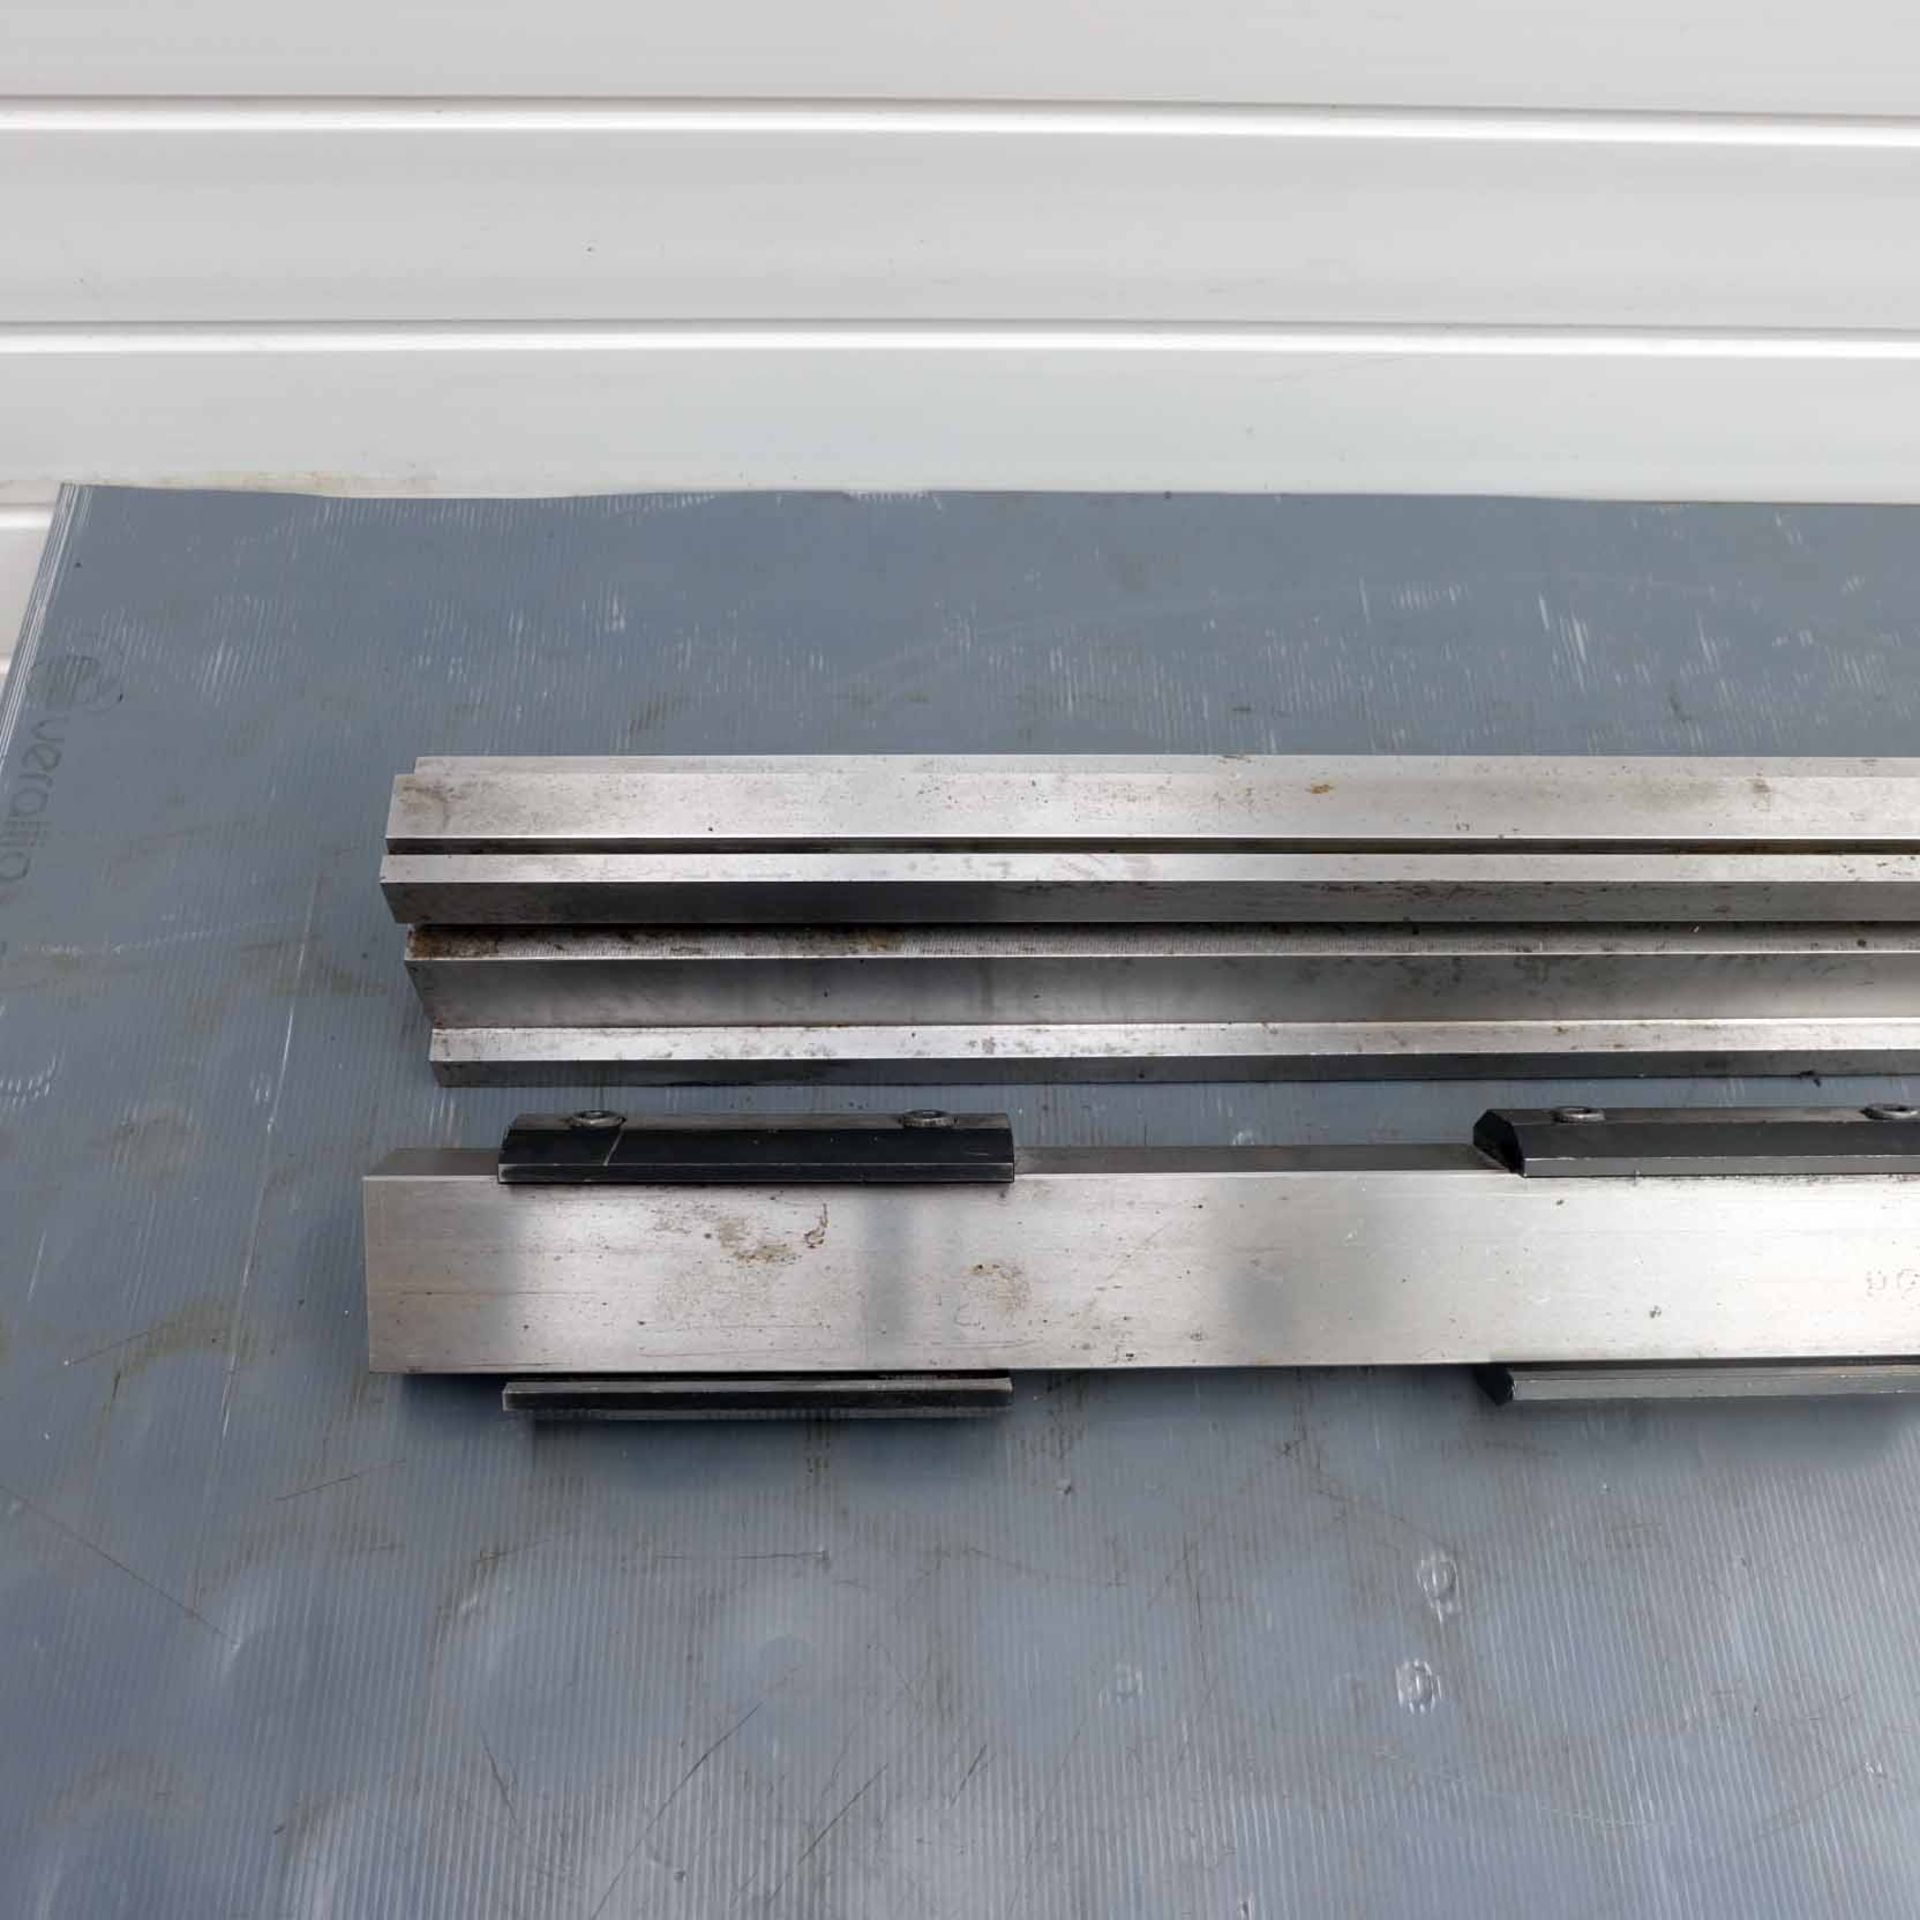 Spring Loaded Hemming Type Bottom Press Brake Tool. 1 x 835mm Long x 100mm High. 60mm Wide Base. 40m - Image 4 of 7